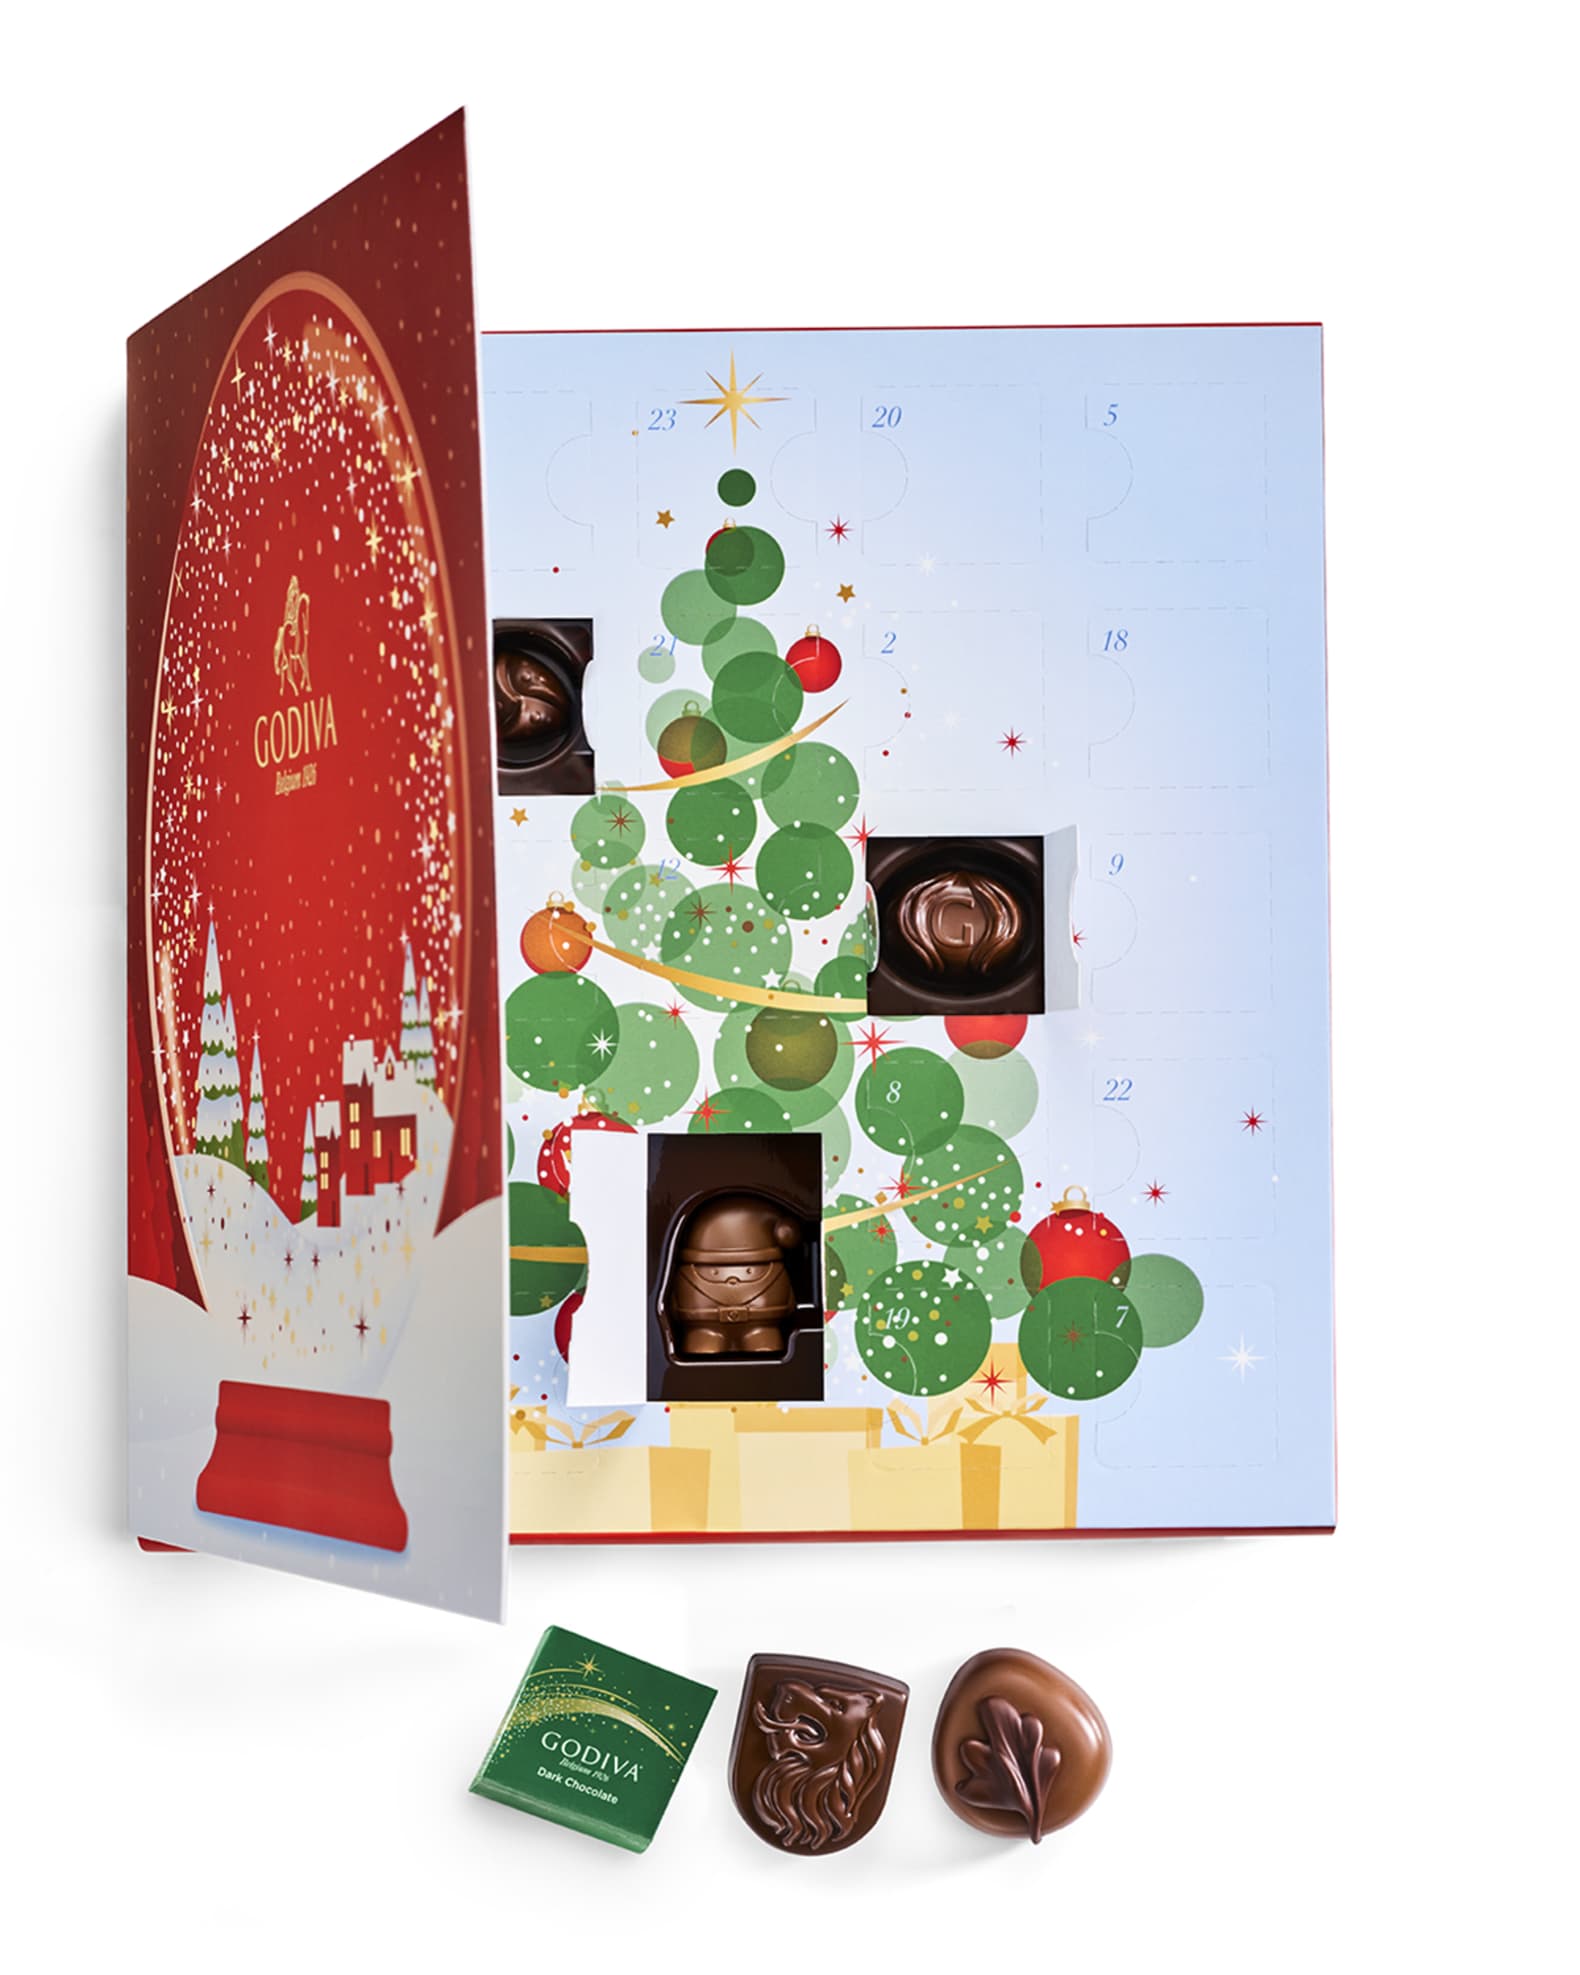 Godiva Chocolatier Holiday Advent Calendar Neiman Marcus